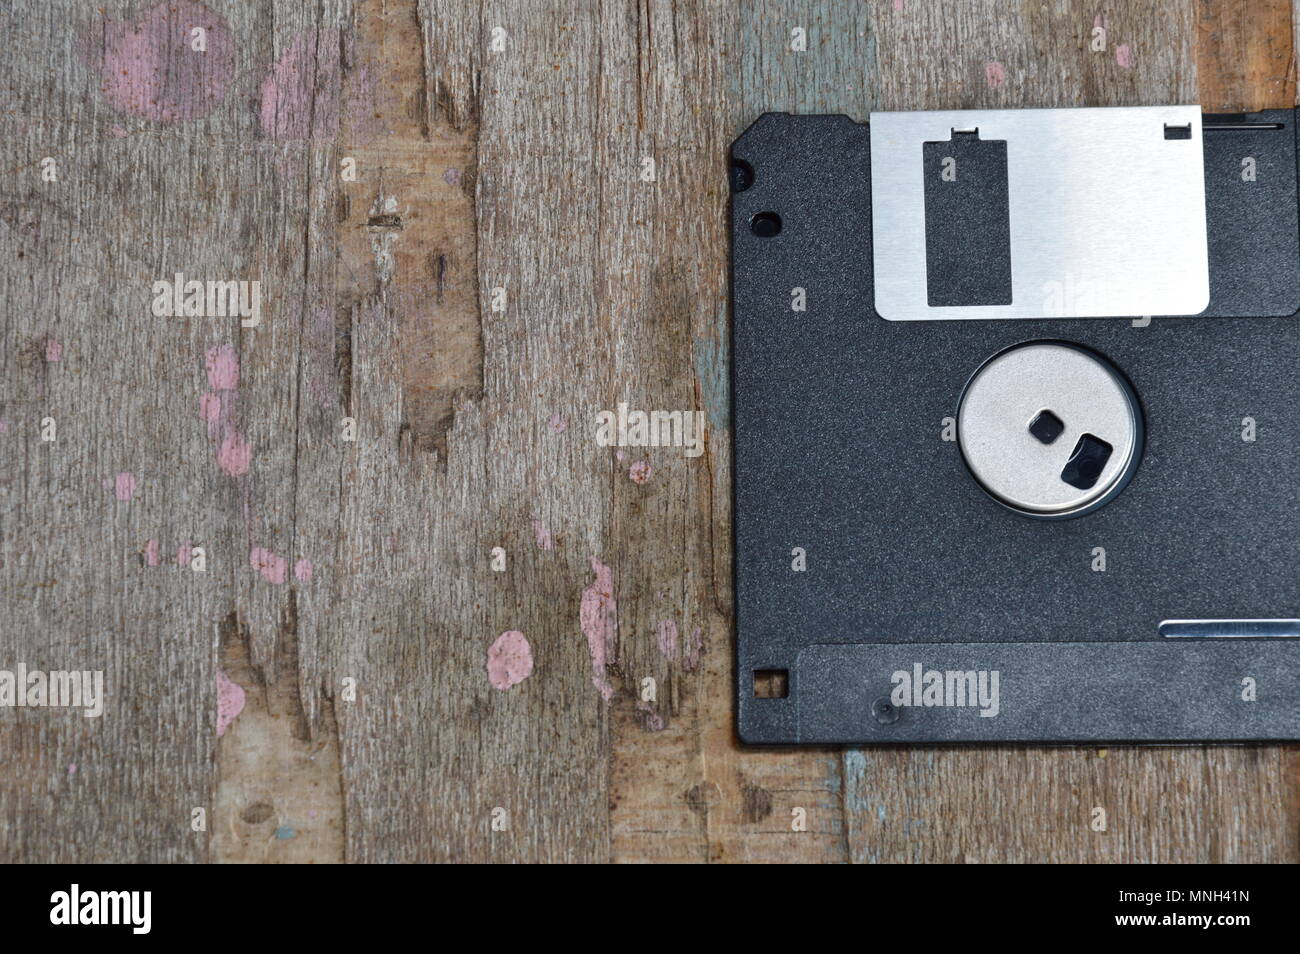 black floppy disk on wood board Stock Photo